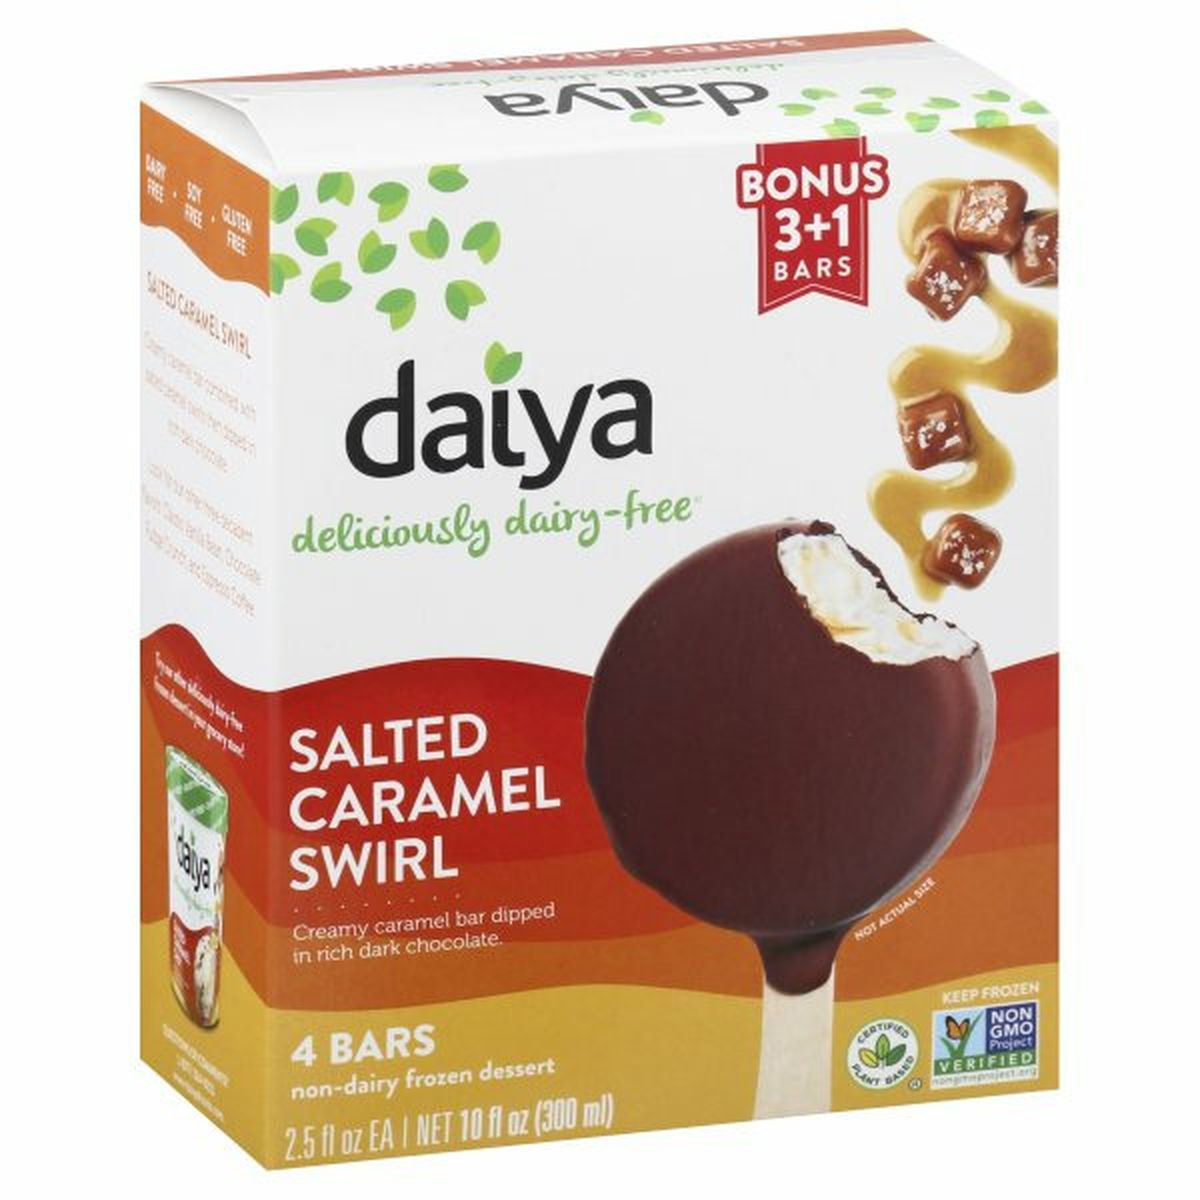 Calories in Daiya Frozen Dessert Bars, Non-Dairy, Salted Caramel Swirl, 4 Pack